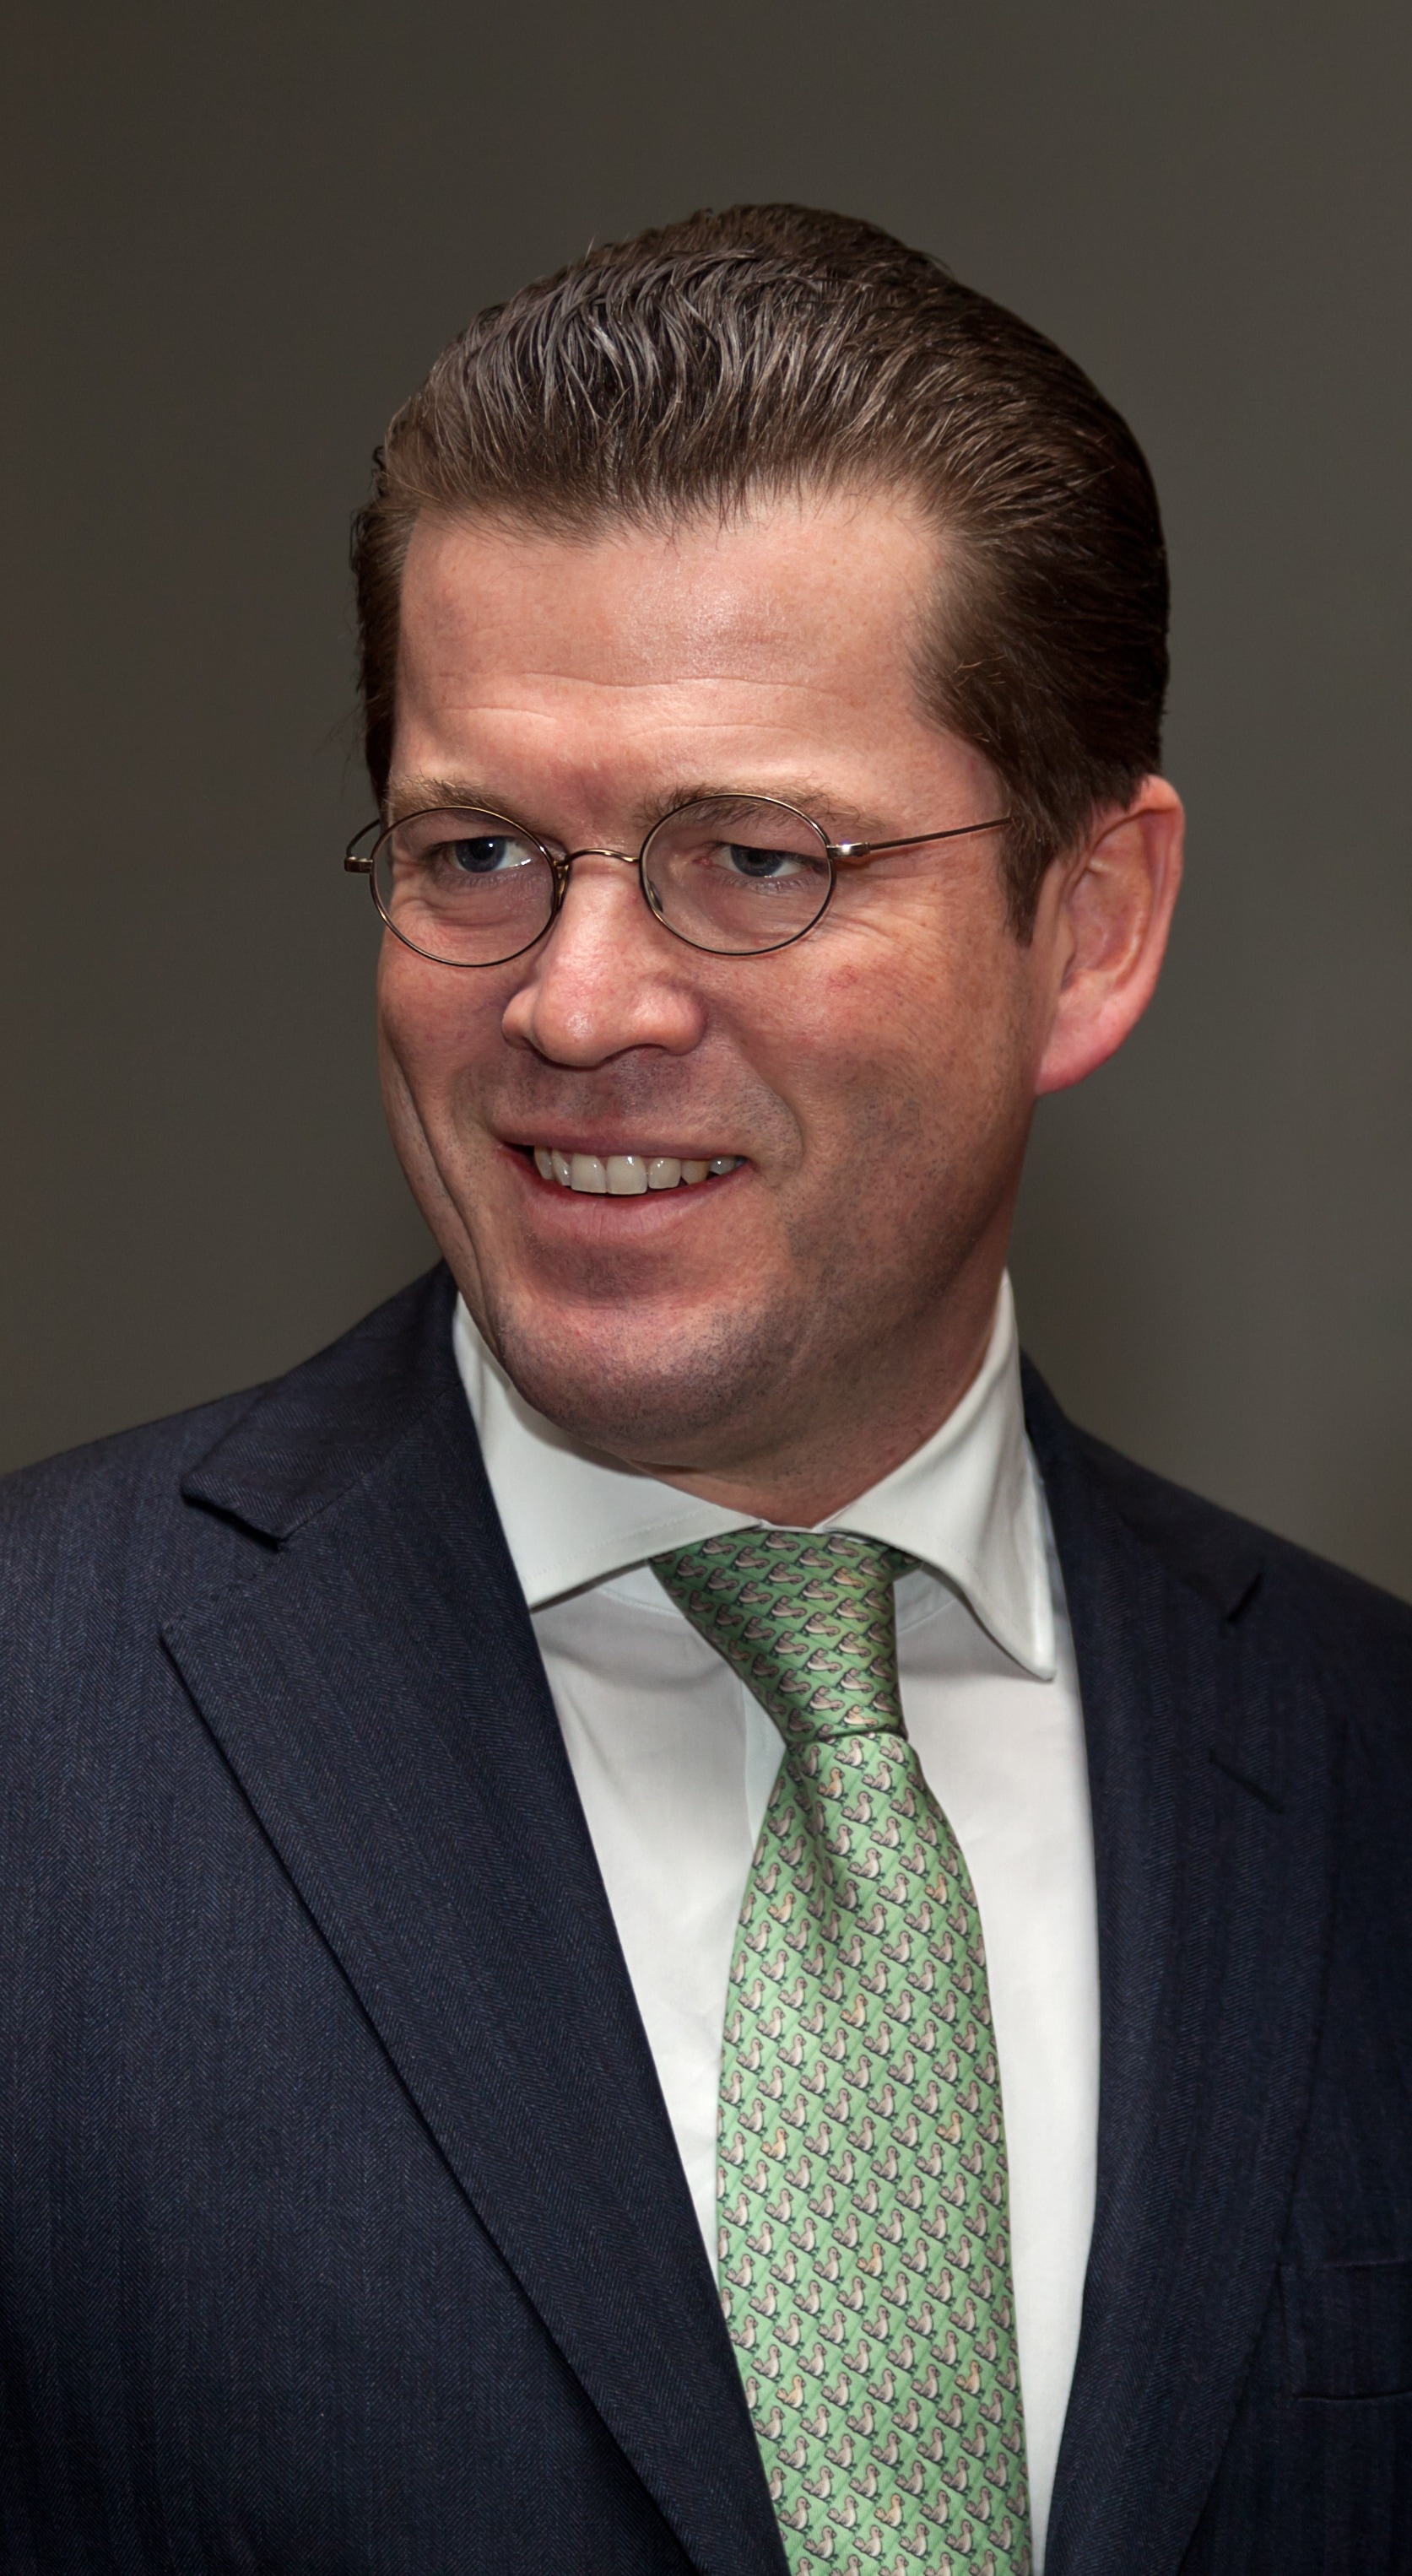 men's black framed eyeglasses, black notch lapel suit jacket and green necktie